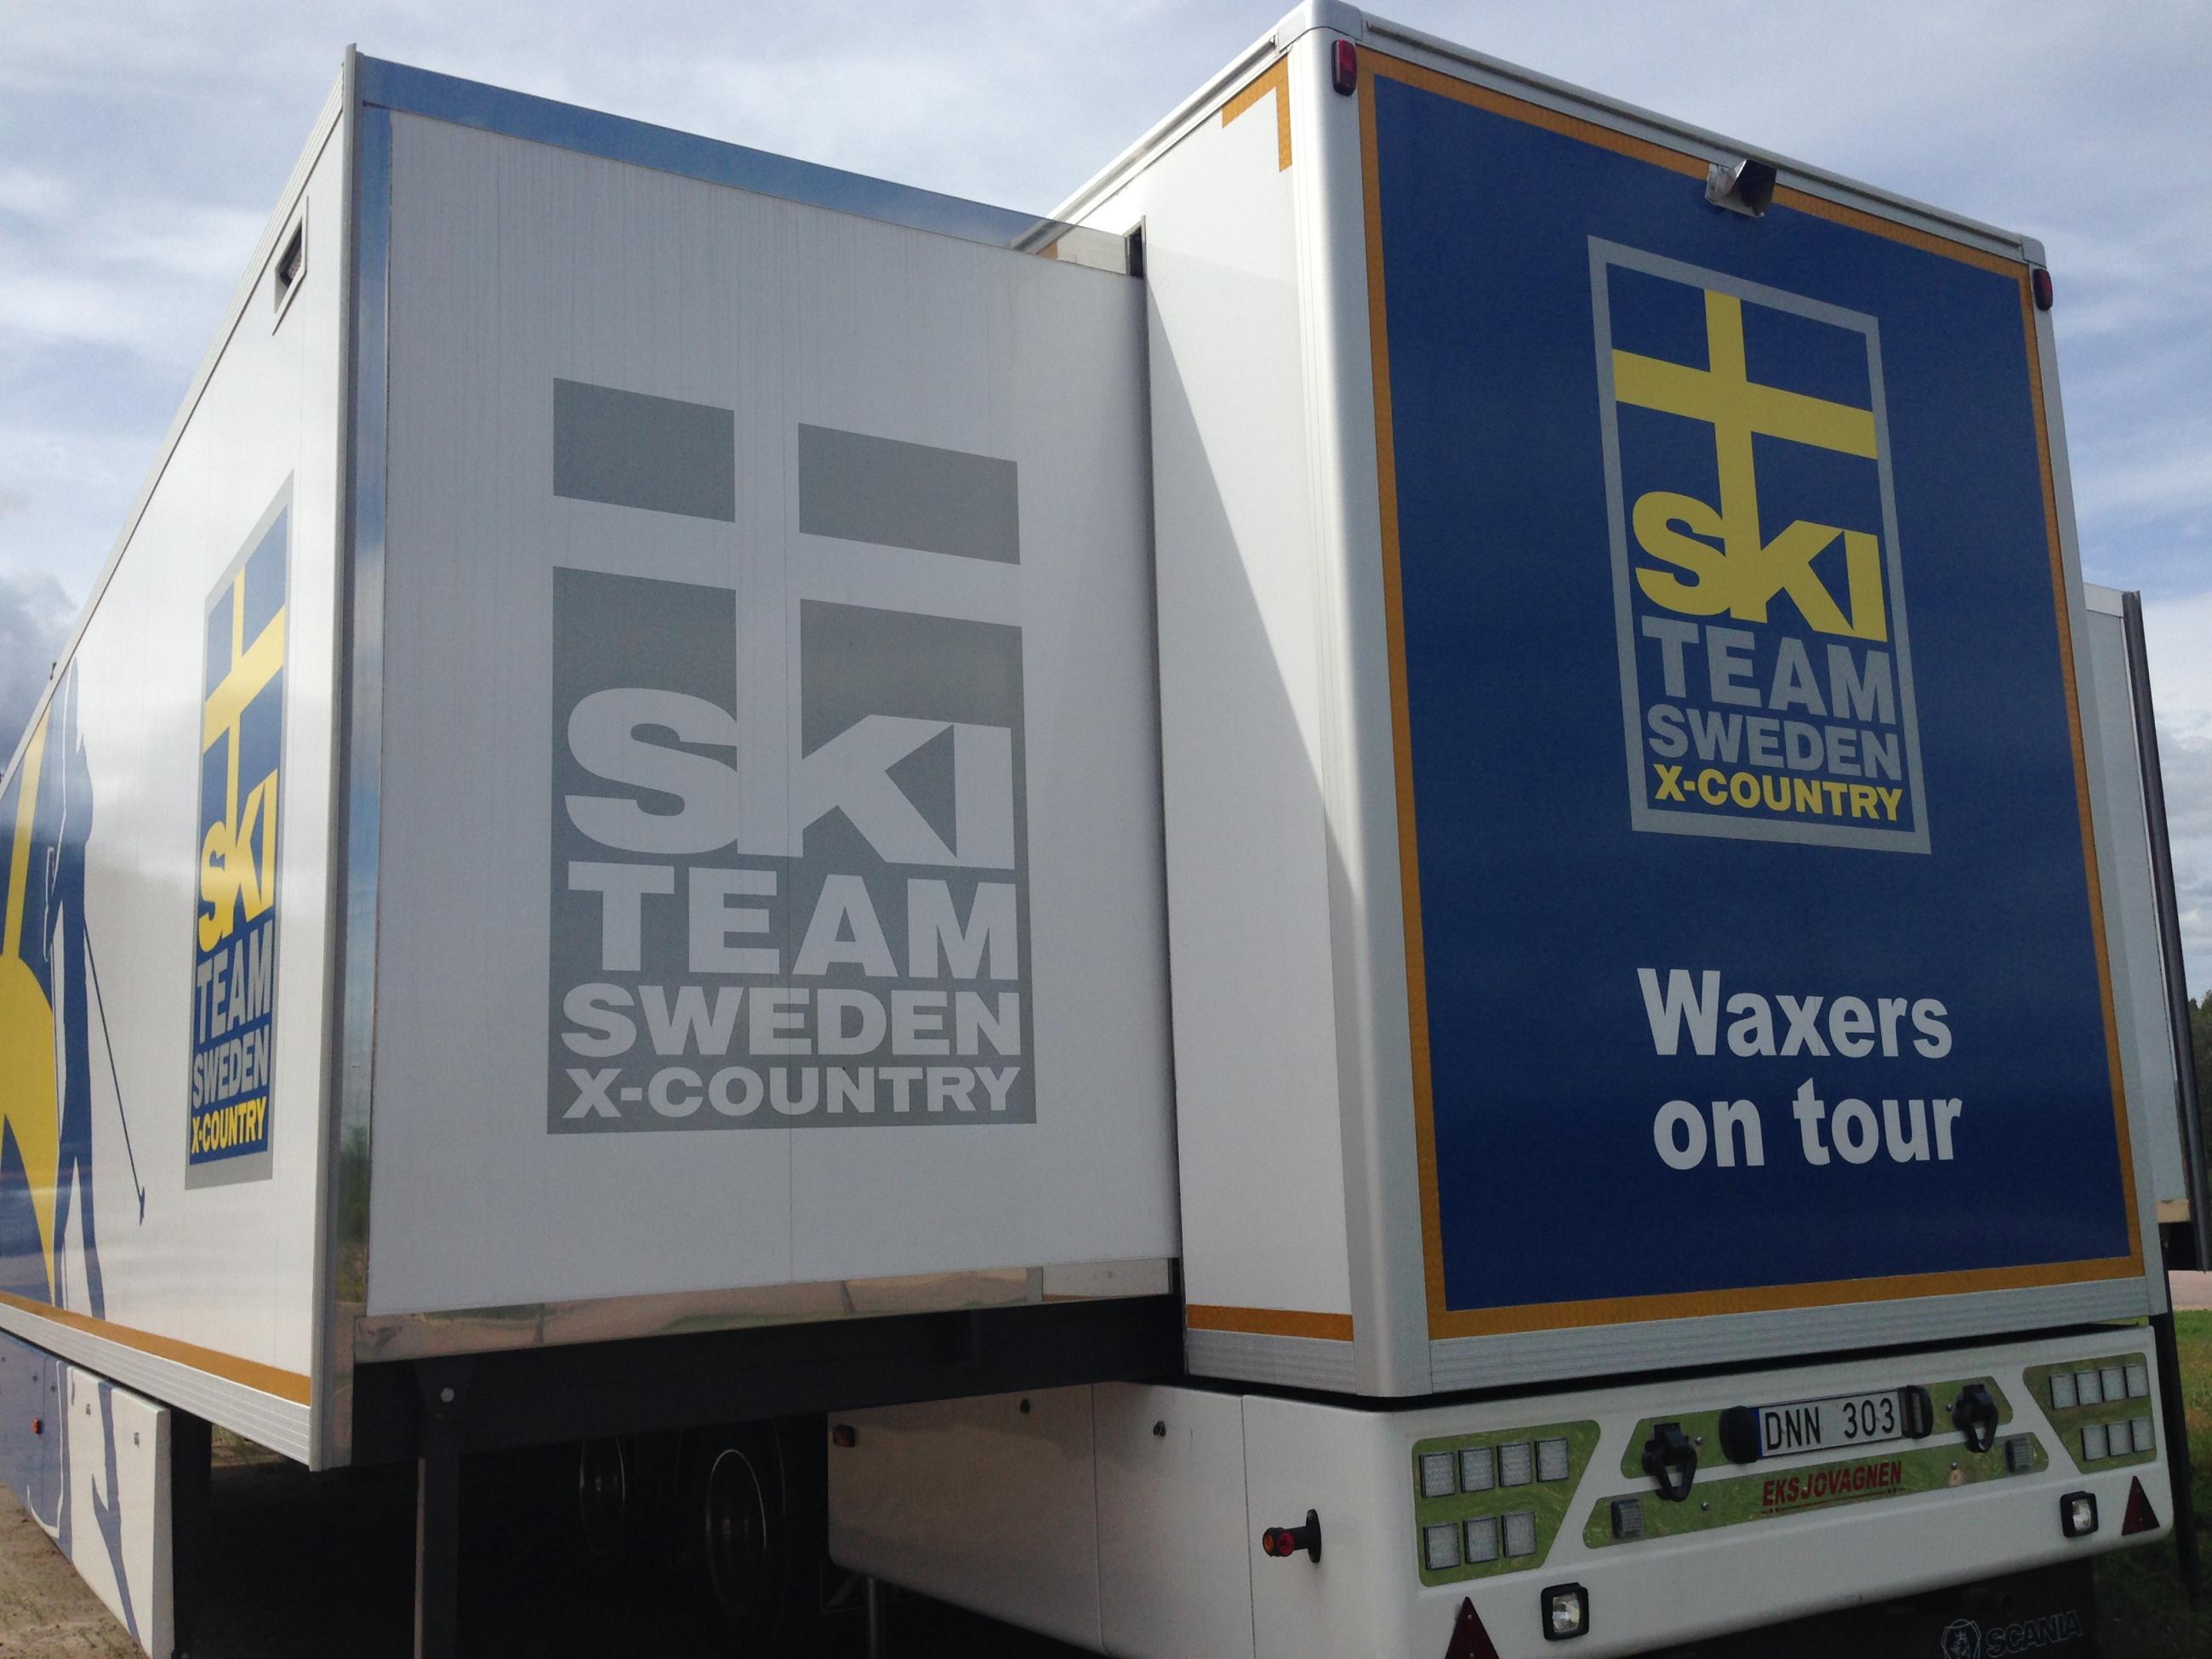 Ski team Sweden mobila vallarbod